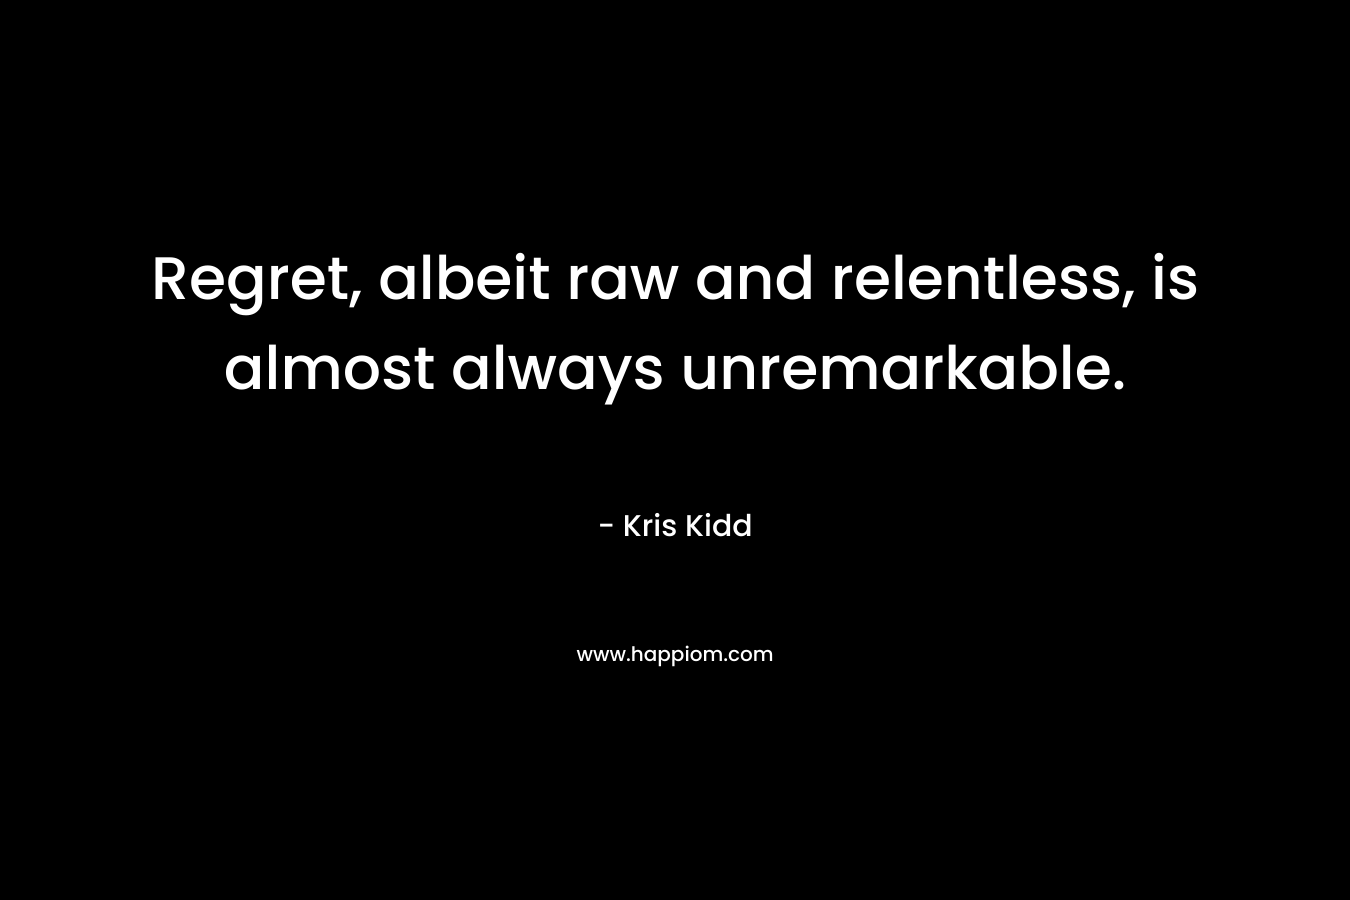 Regret, albeit raw and relentless, is almost always unremarkable.